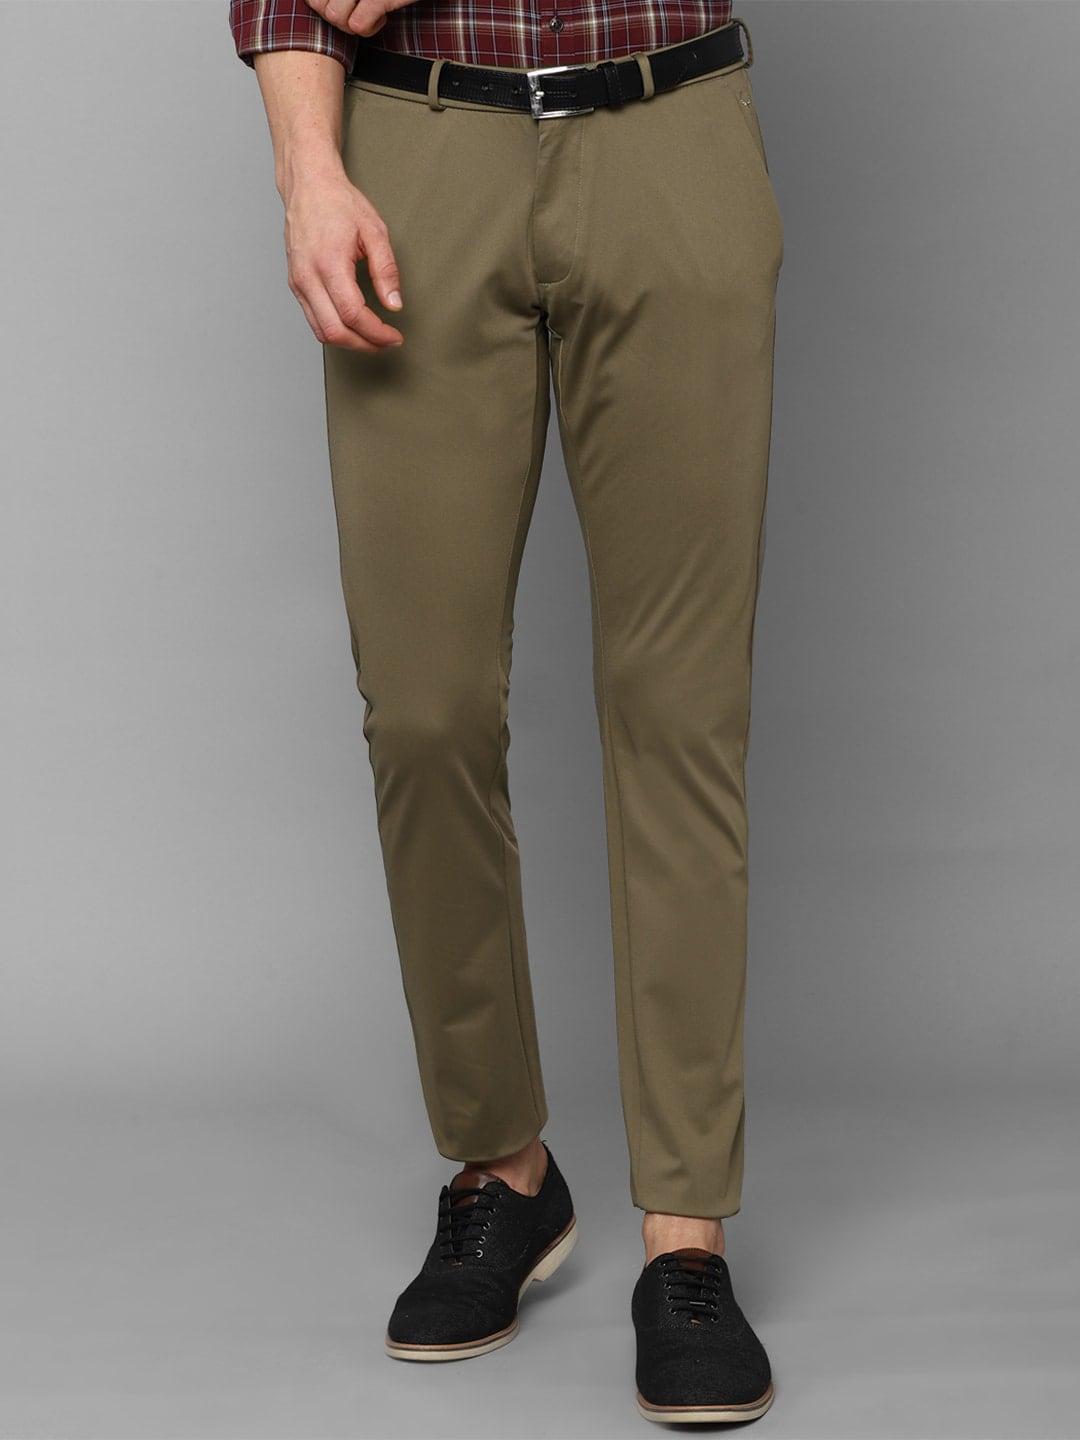 allen-solly-men-olive-green-slim-fit-trousers